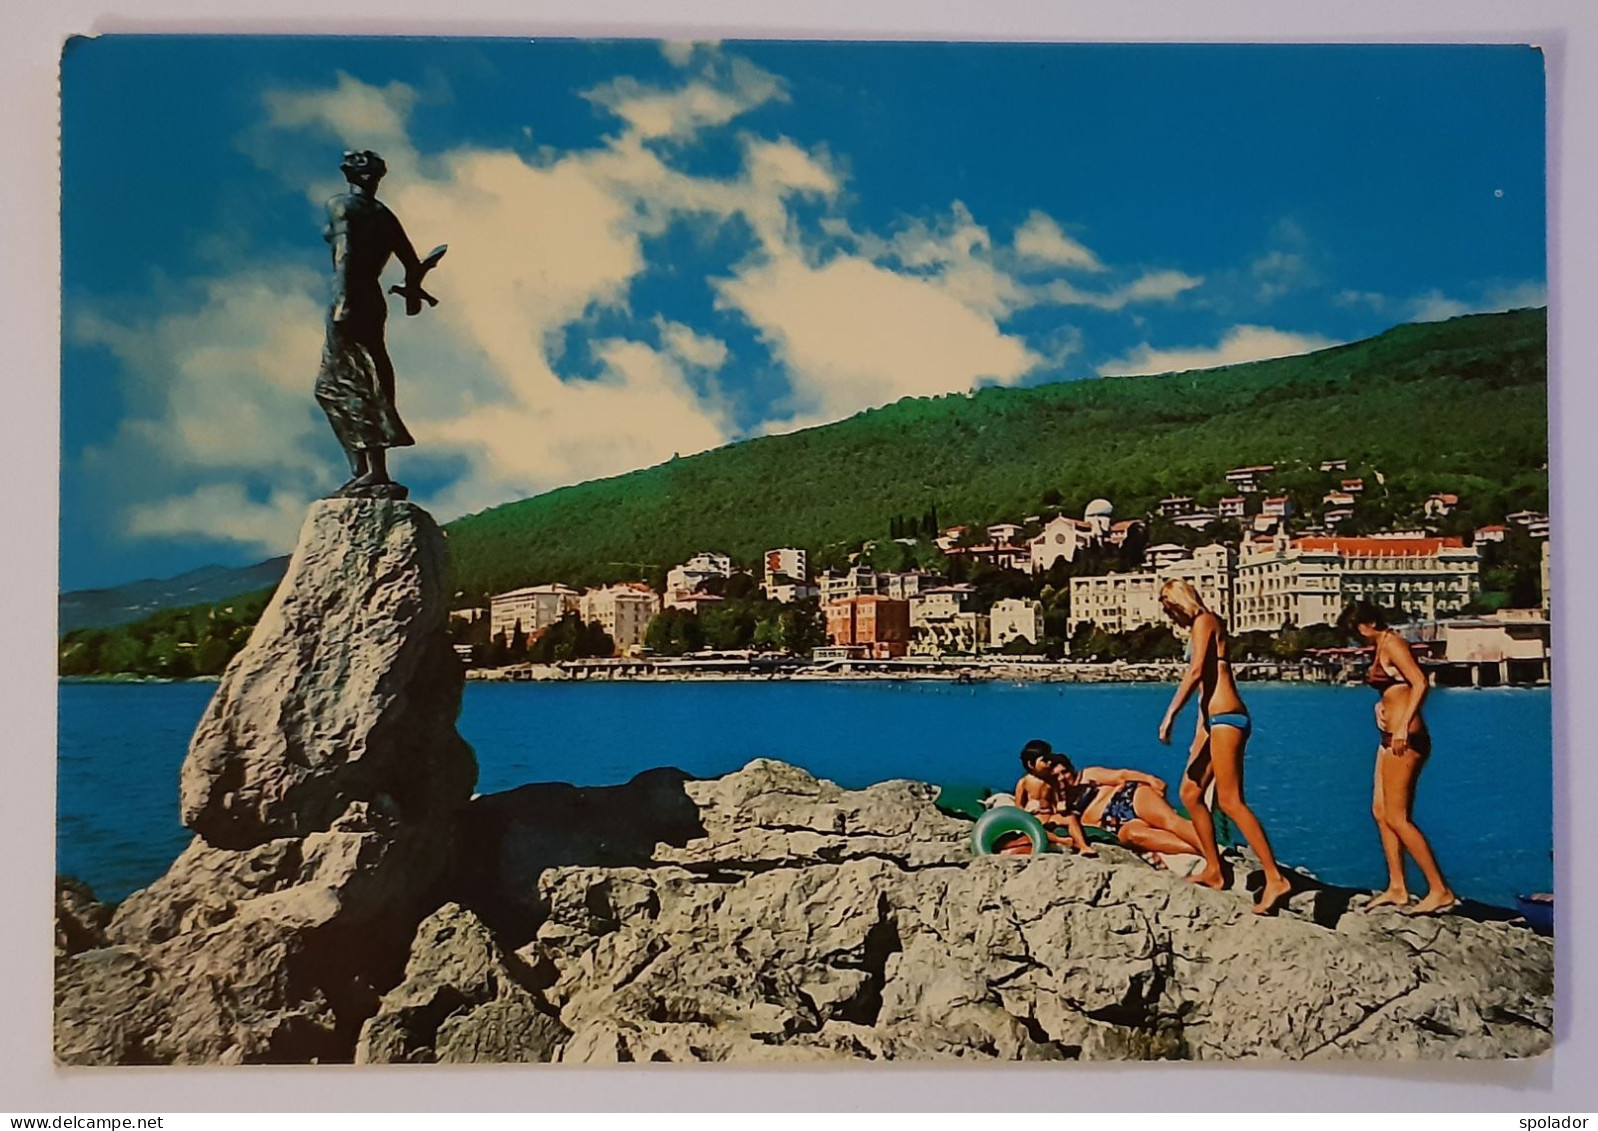 OPATIJA-Vintage Postcard-Ex-Yugoslavia-Croatia-Istra-Hrvatska-used With Stamp-1978 - Yugoslavia